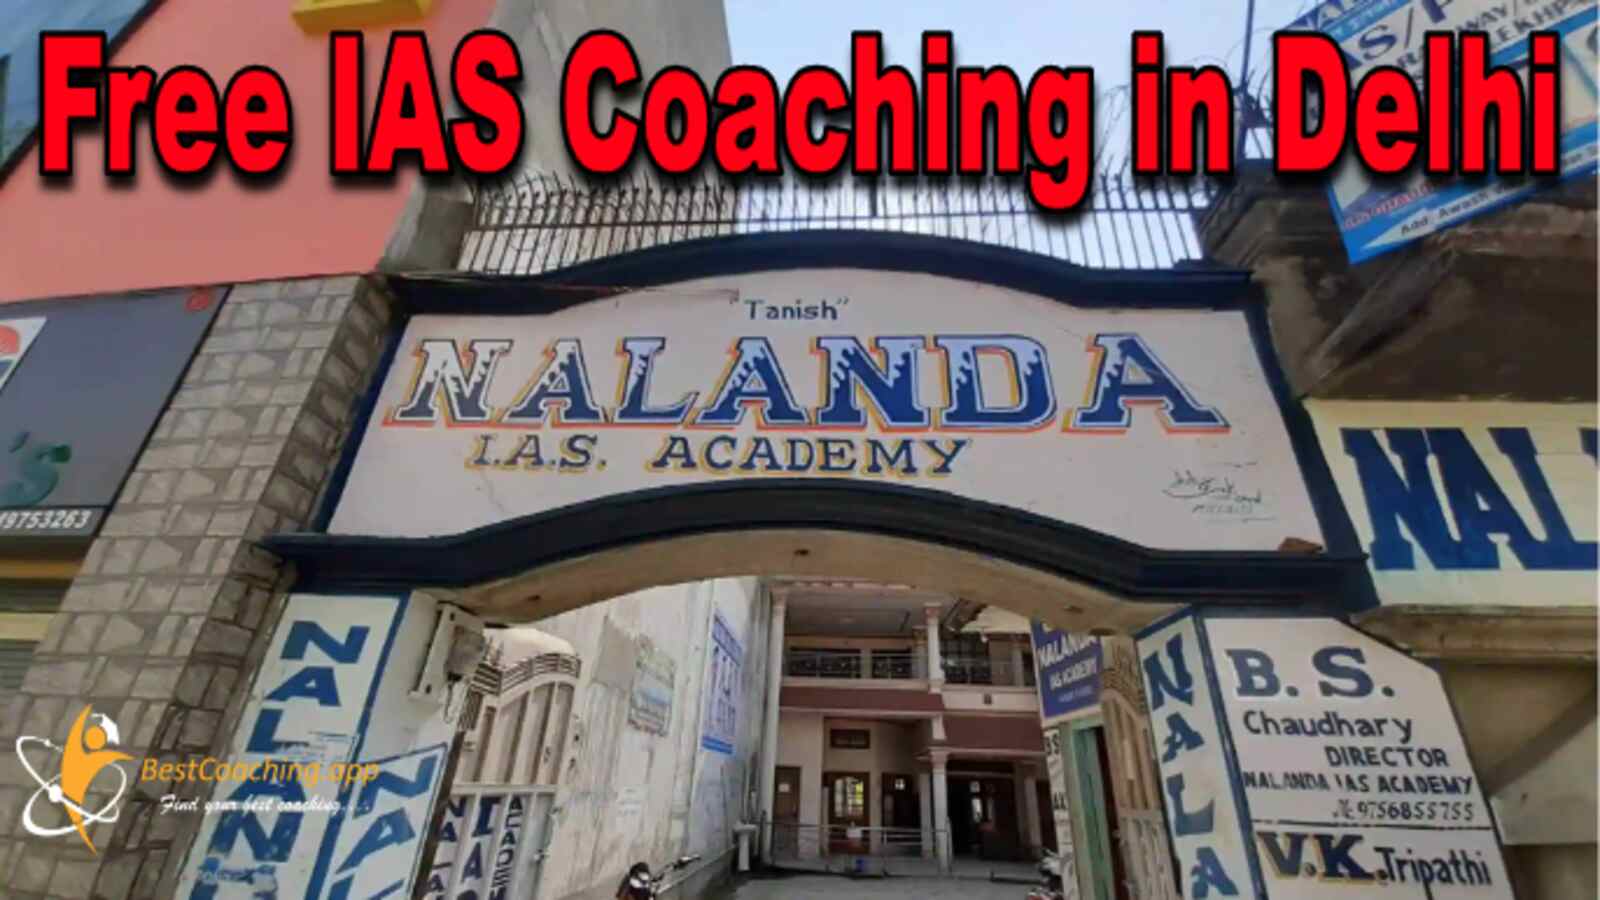 Nalanda IAS Academy free IAS Coaching in Delhi